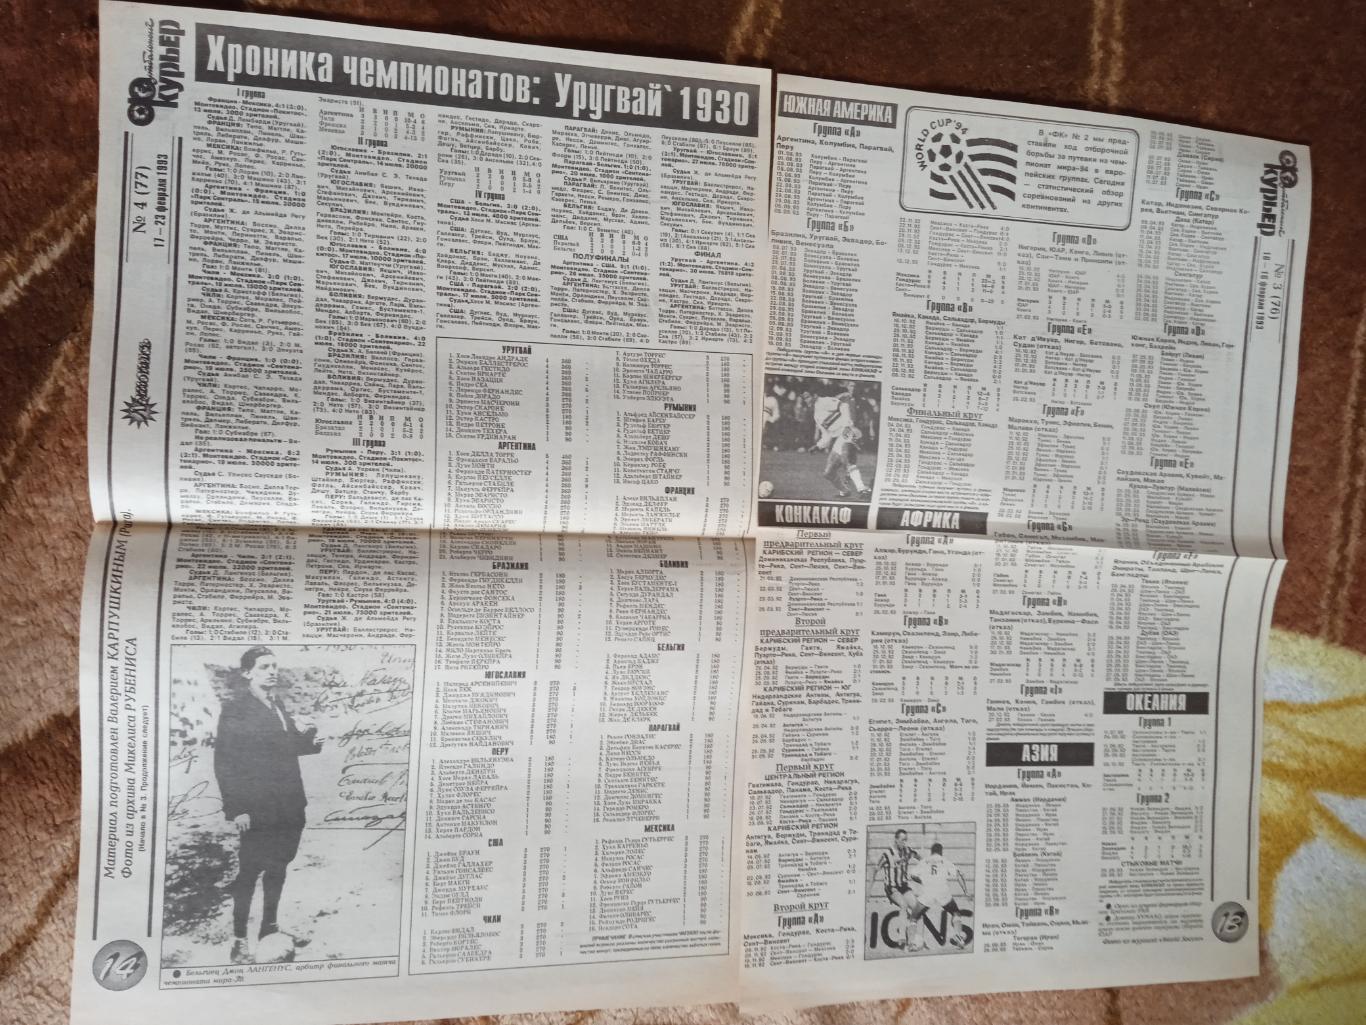 Статья.Фото.Футбол.Чемпионат мира 1930.Уругвай. 1